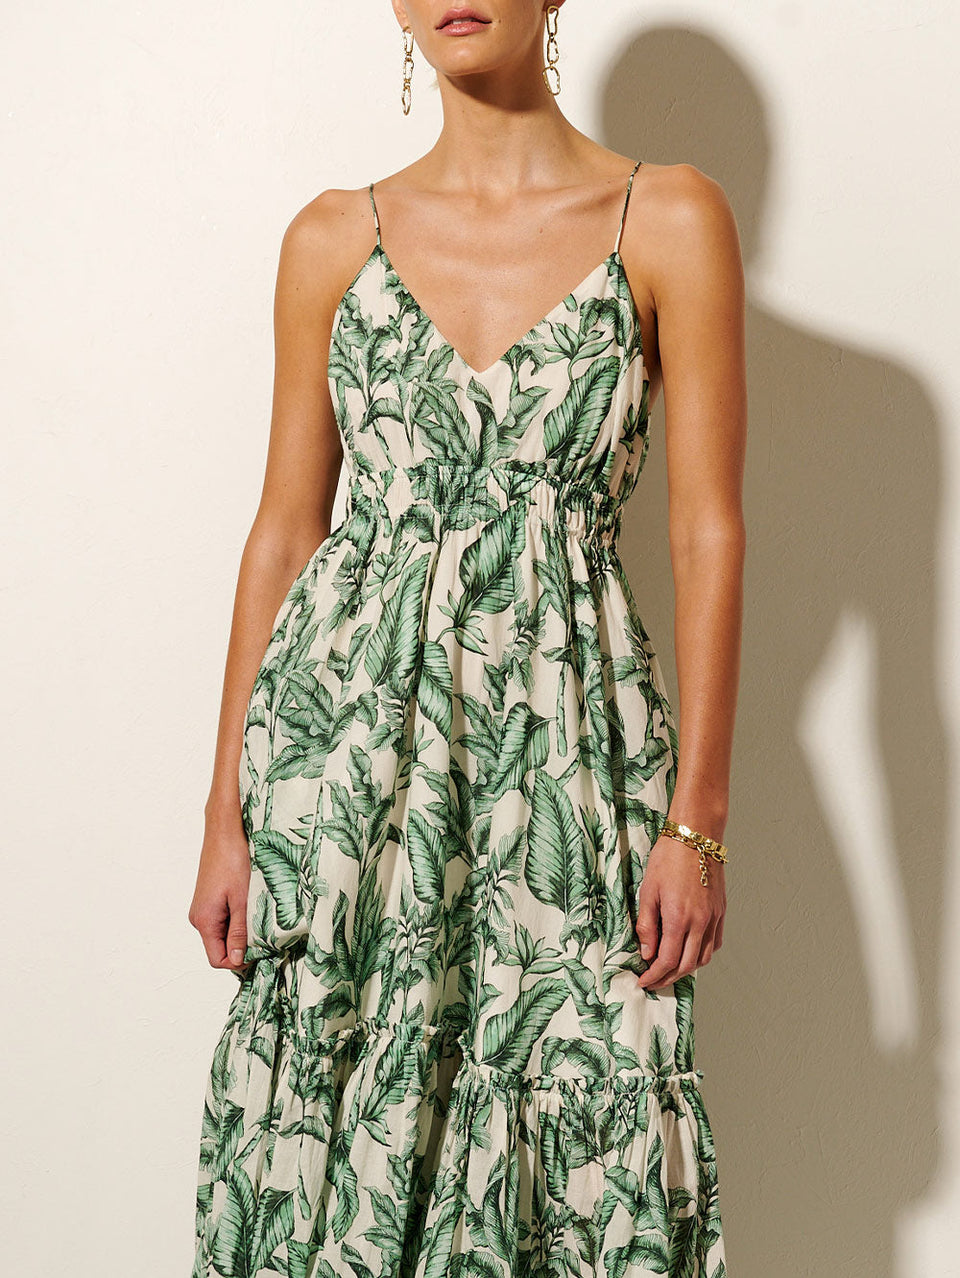 Tropico Maxi Dress KIVARI | Model wears palm leaf printed maxi dress close up